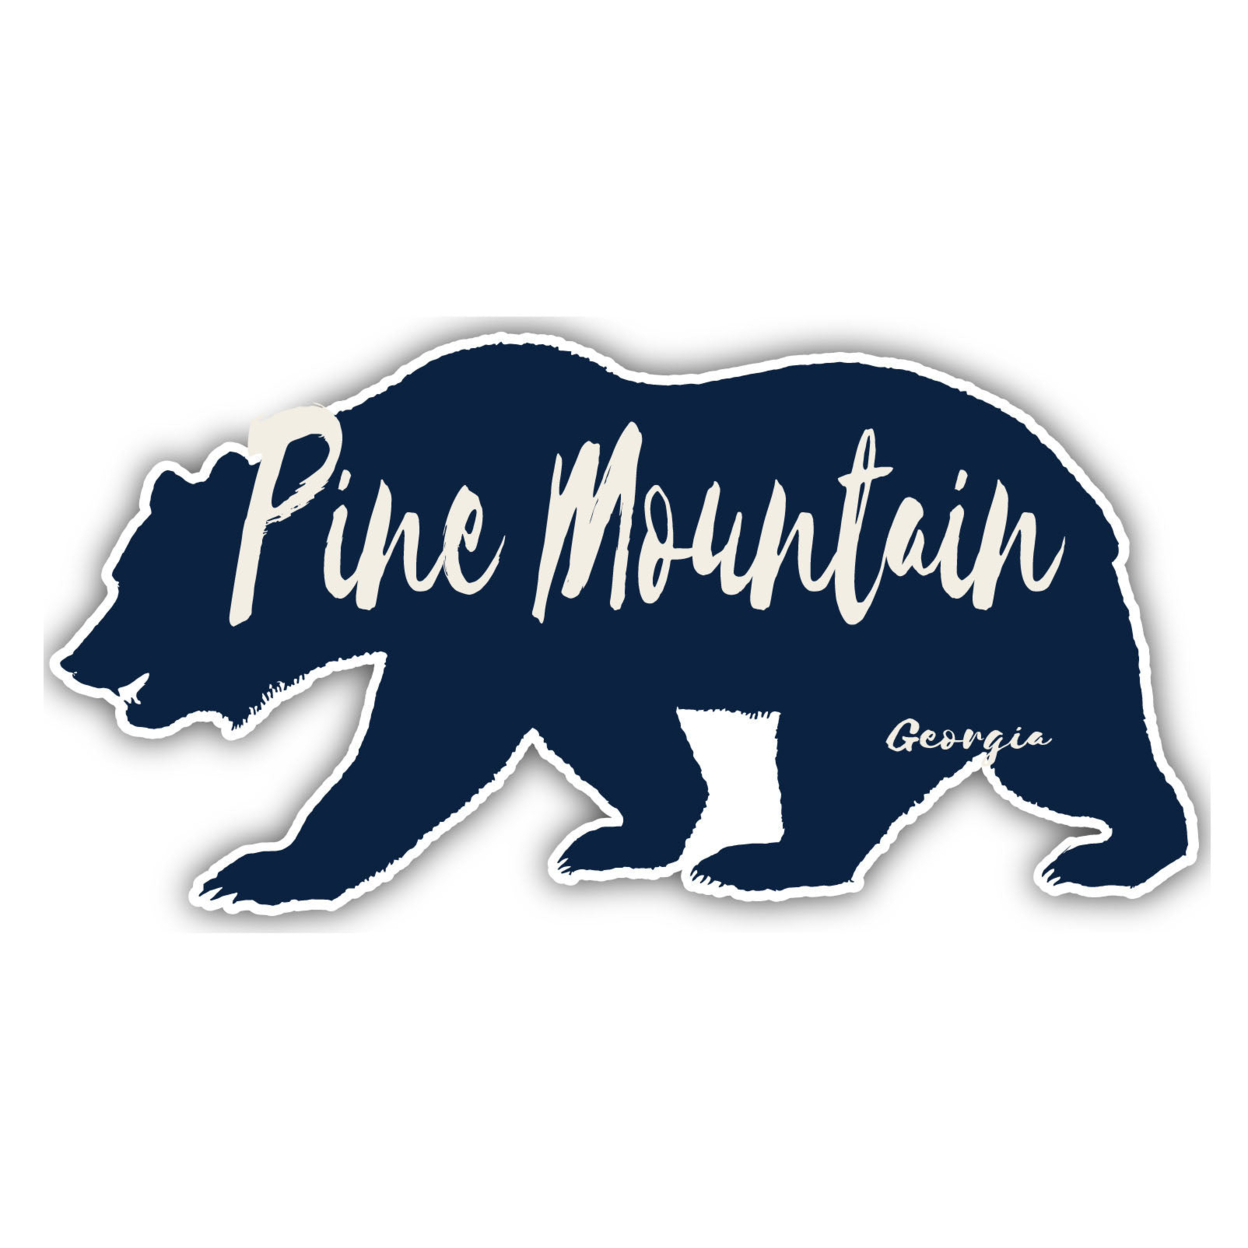 Pine Mountain Georgia Souvenir Decorative Stickers (Choose Theme And Size) - Single Unit, 4-Inch, Bear